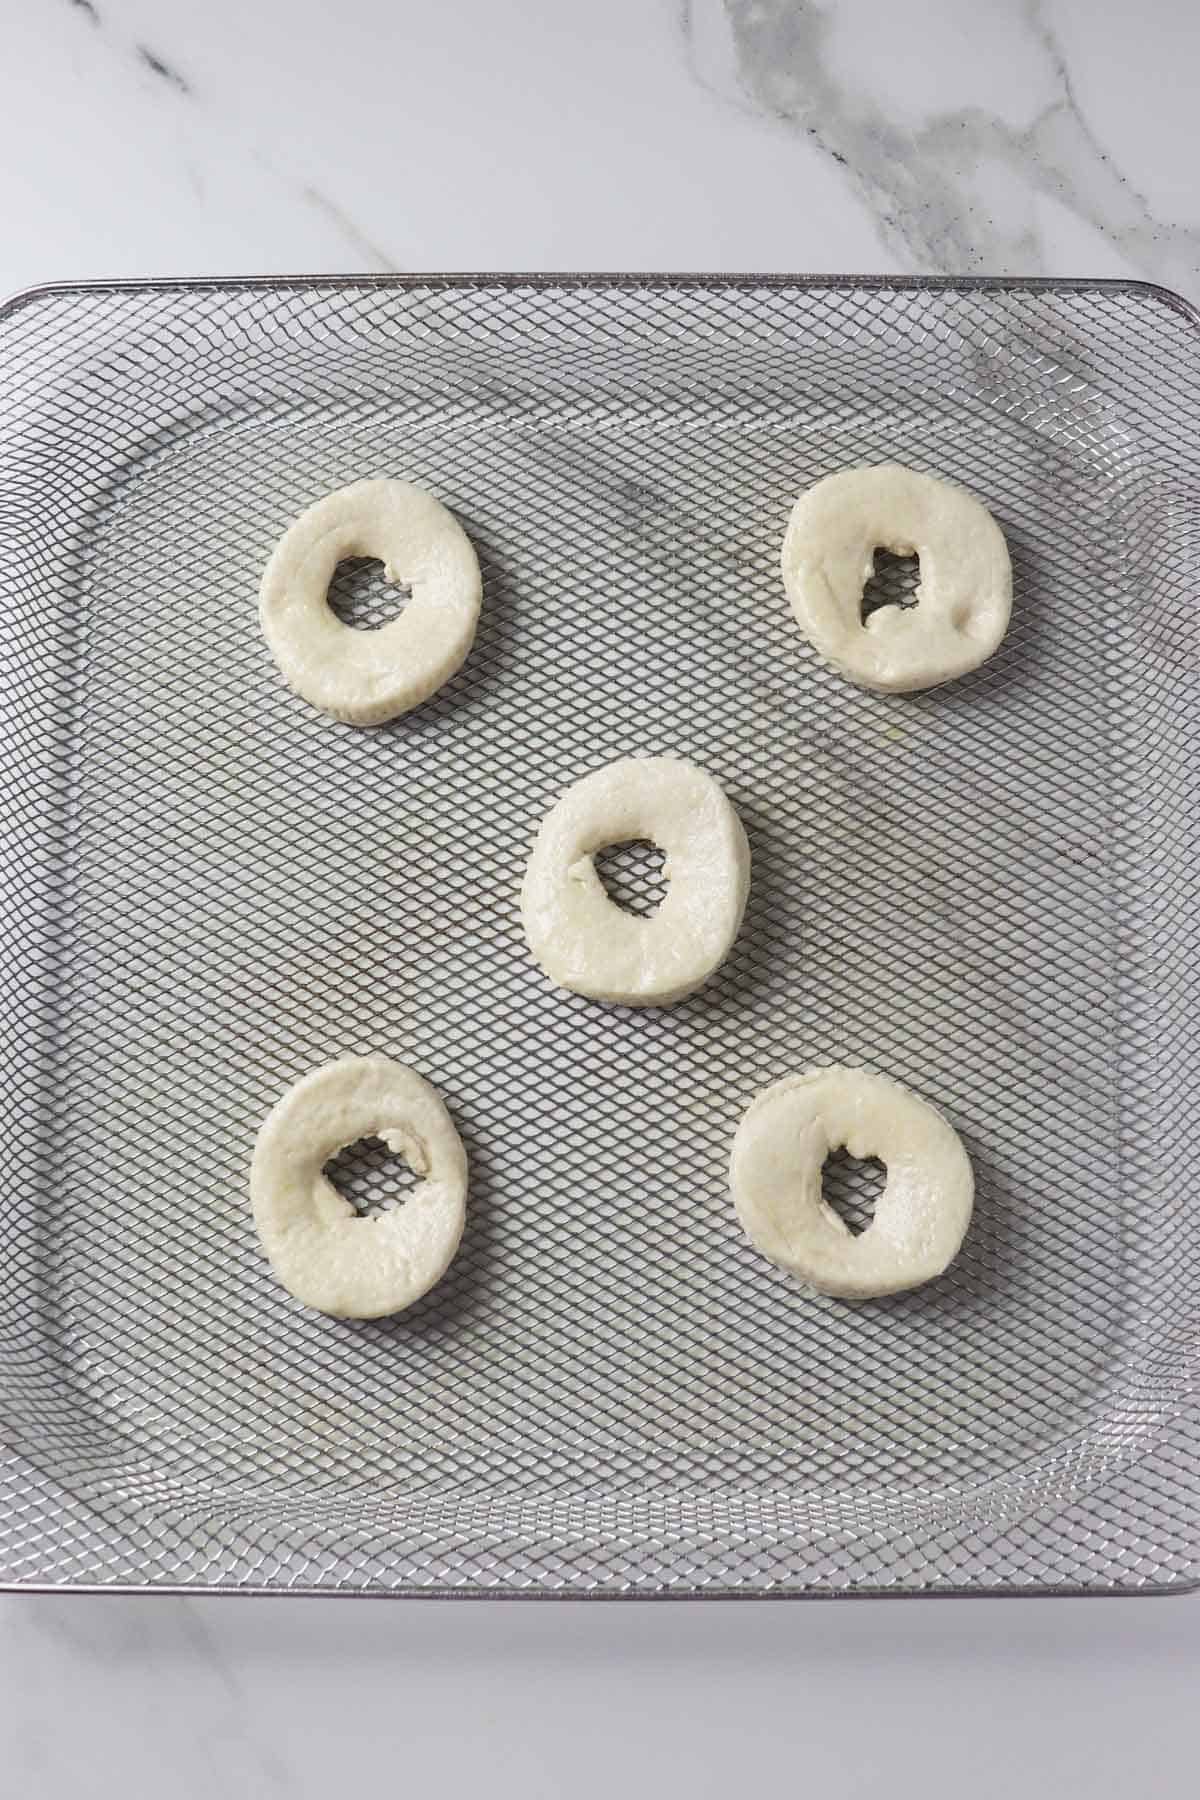 air fryer biscuit donuts in basket